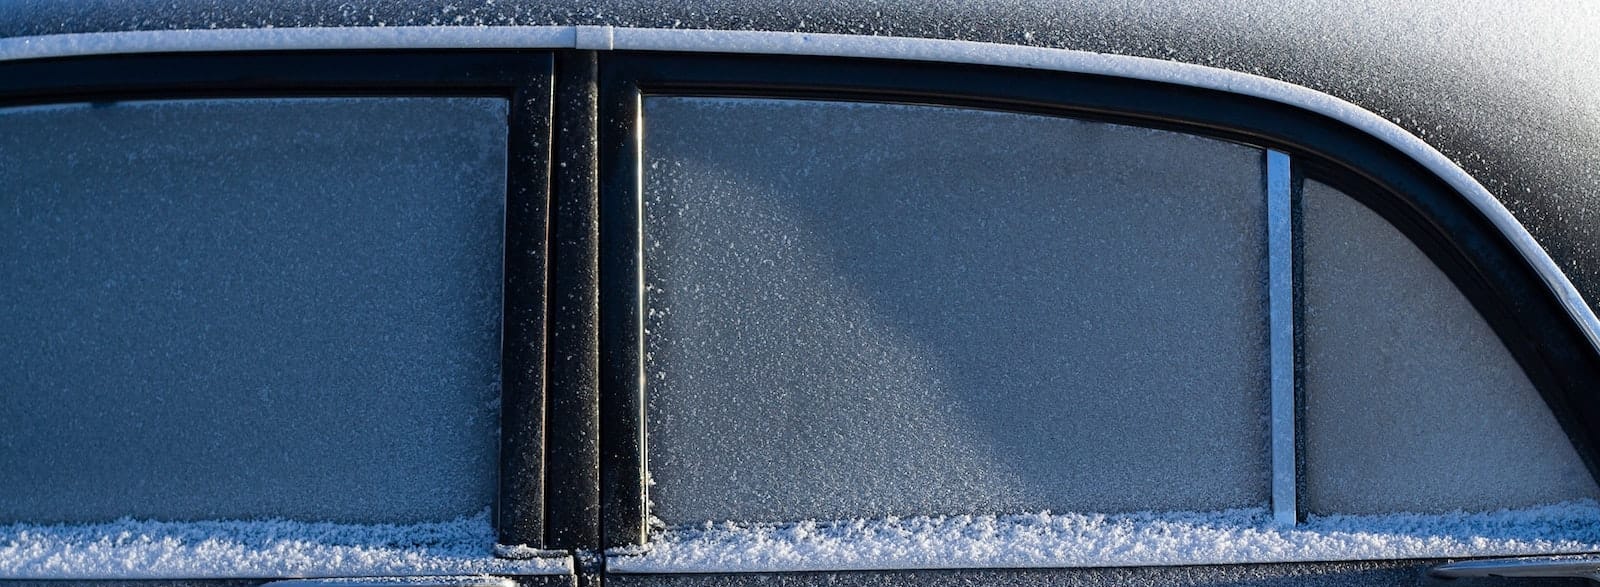 A car with frosty windows